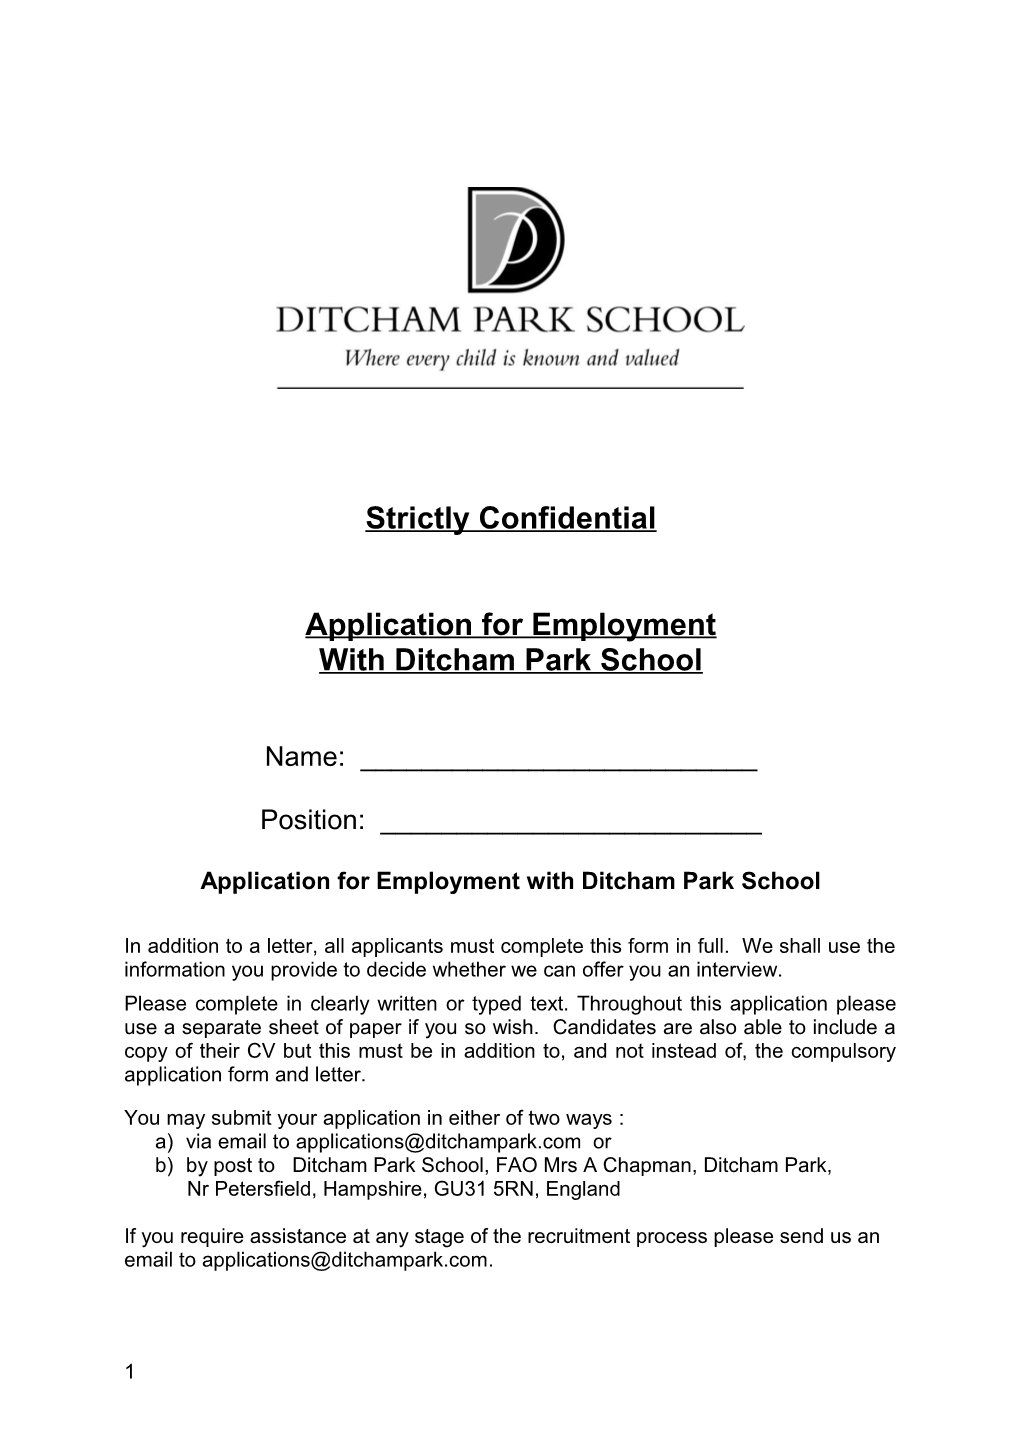 Ditcham Park School